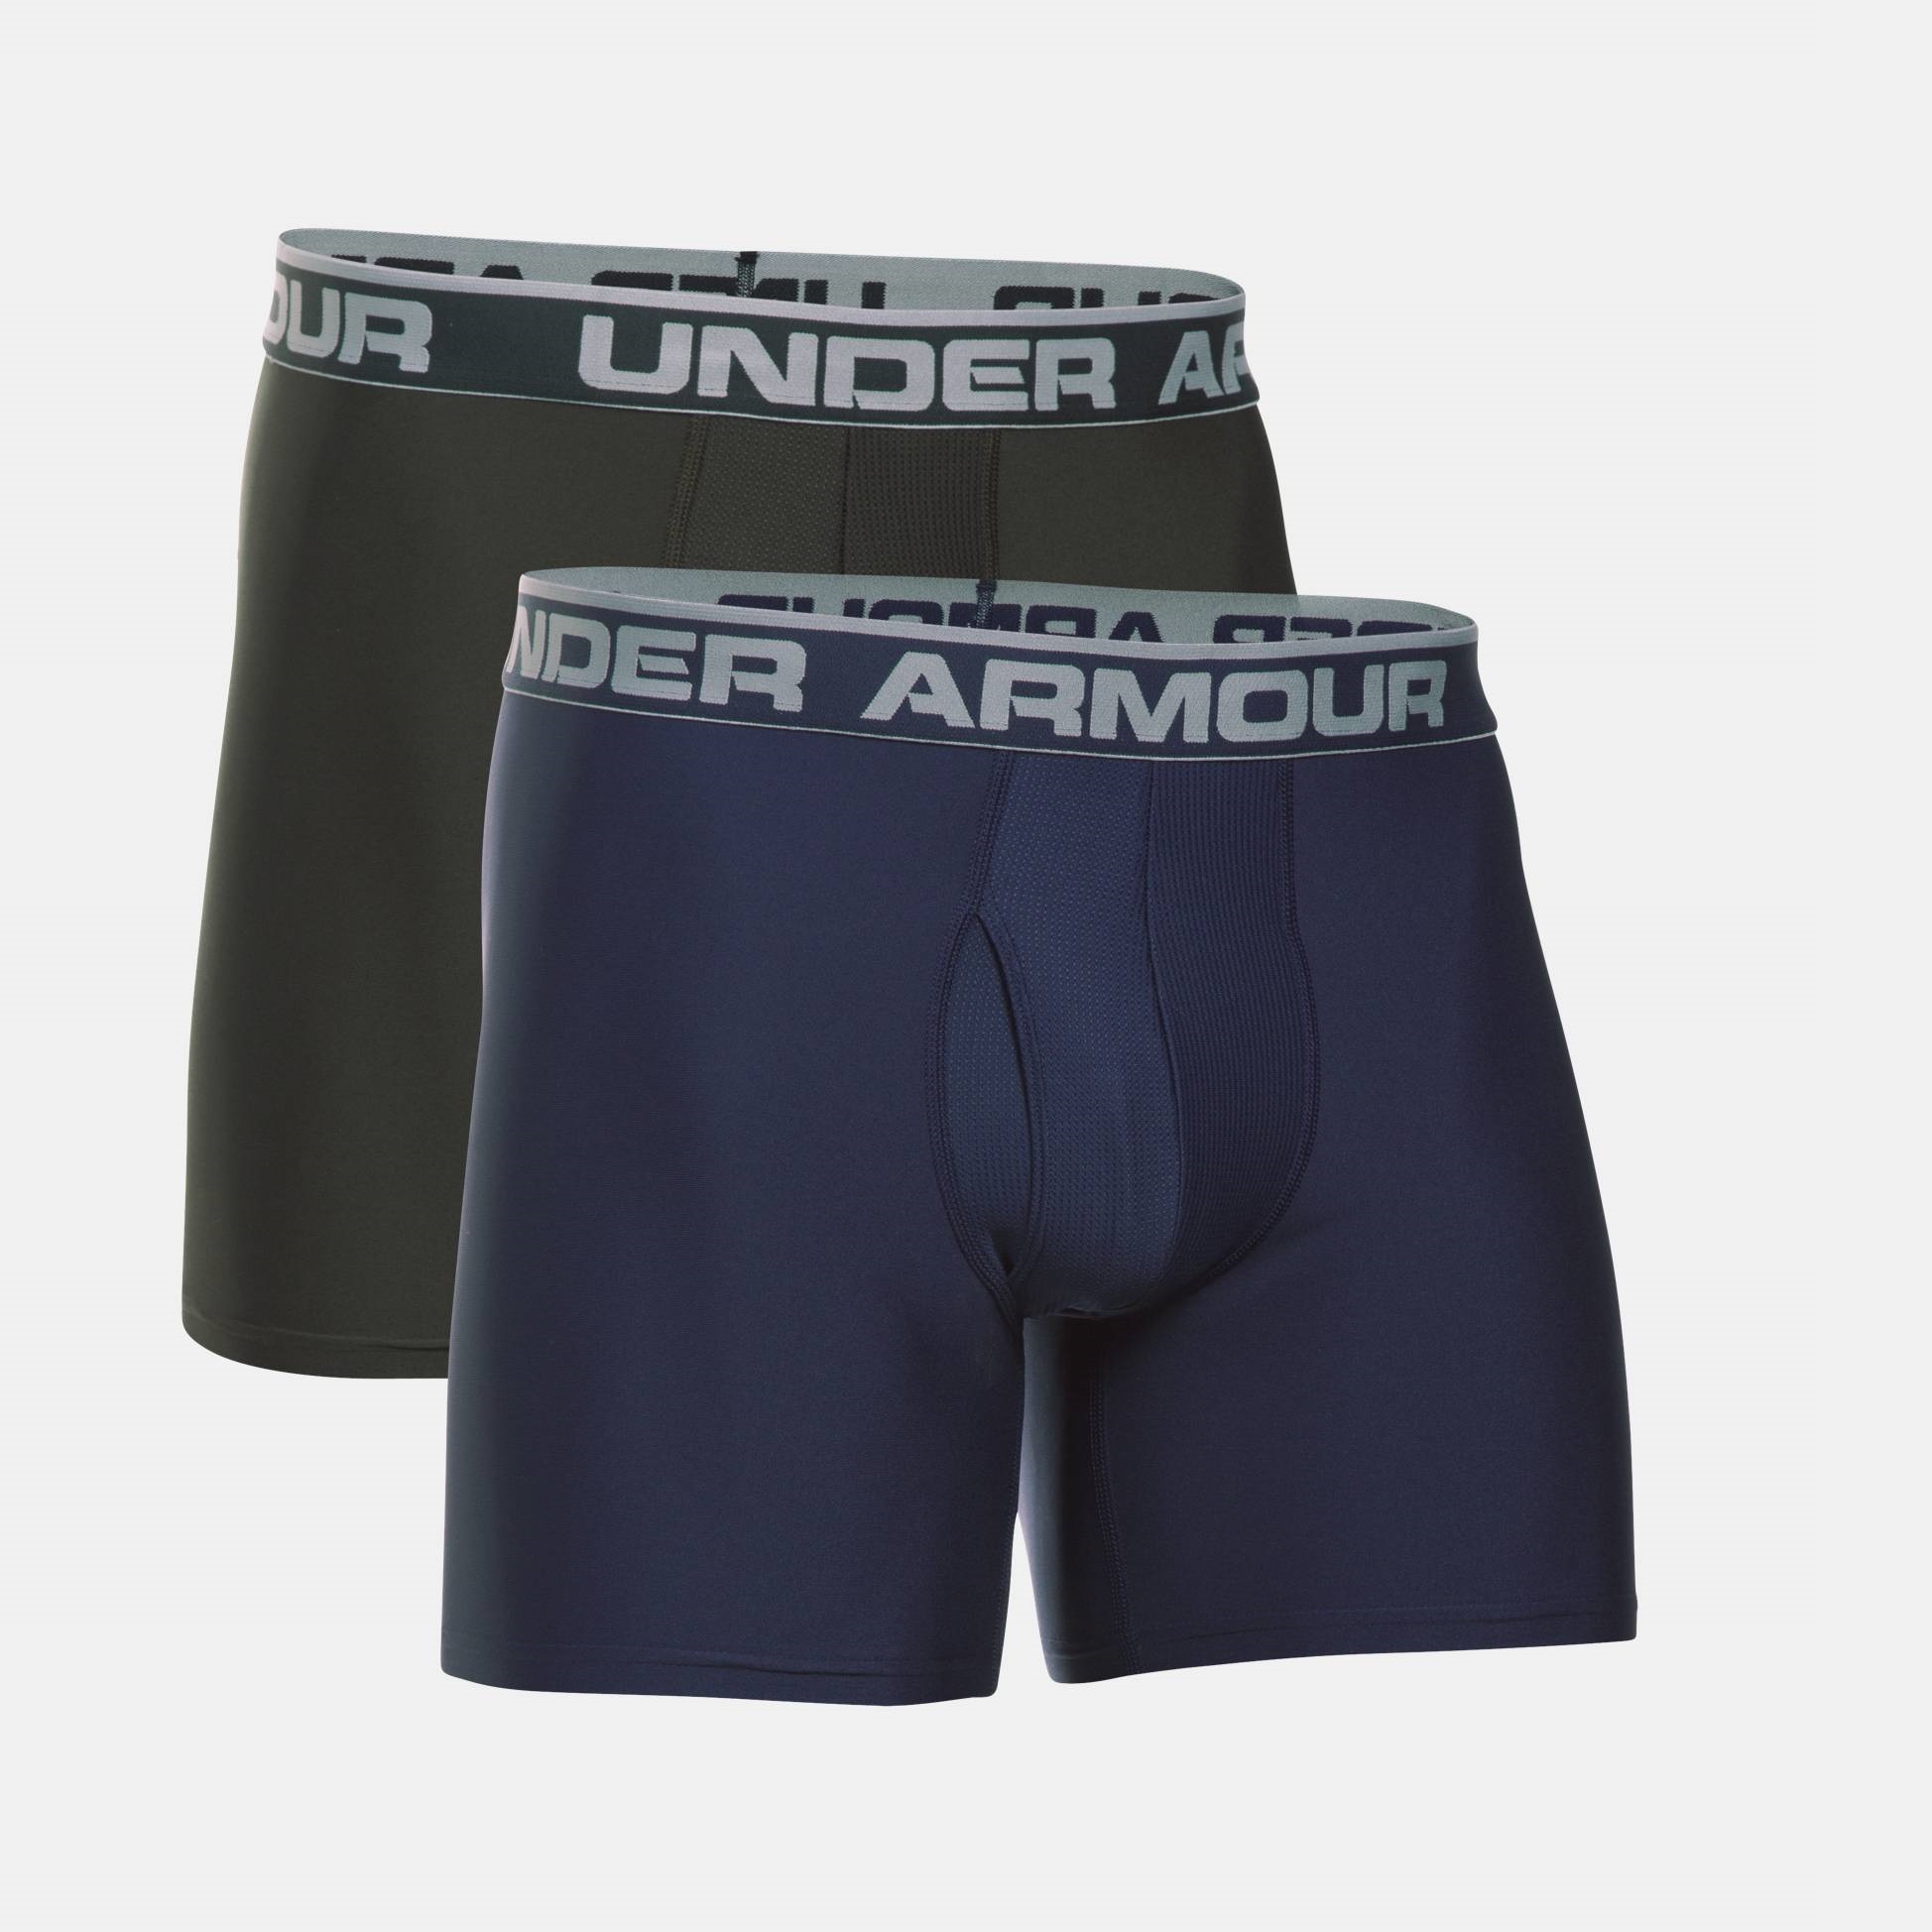 Underwear -  under armour Performance Boxerjock 2 Pack